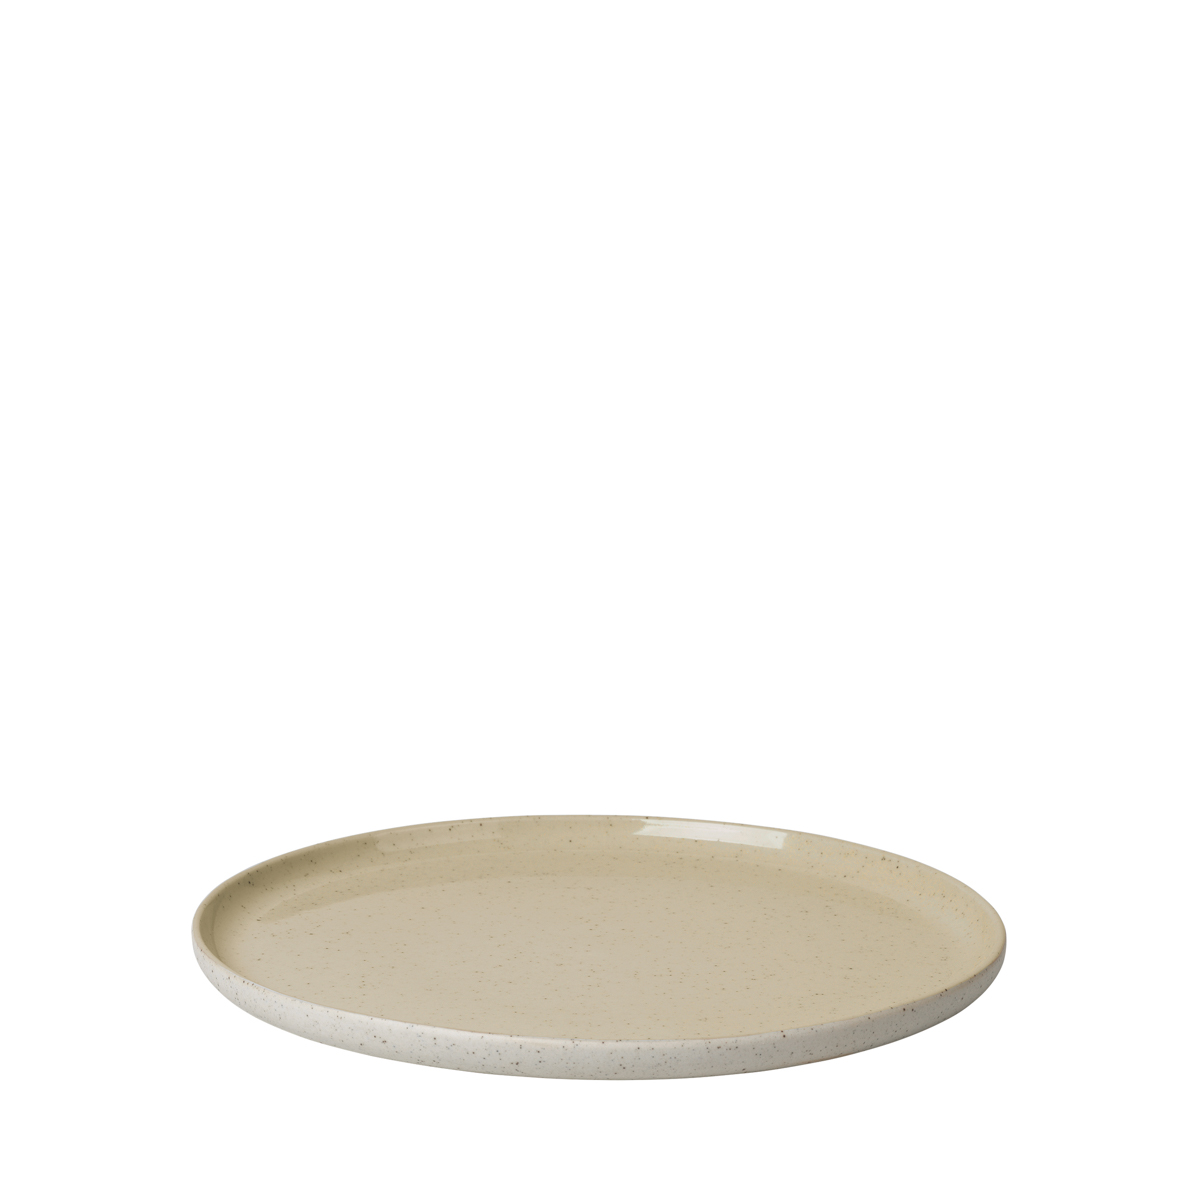 Dessertteller -SABLO- Savannah, Ø 21 cm. Material: Keramik. Von Blomus.